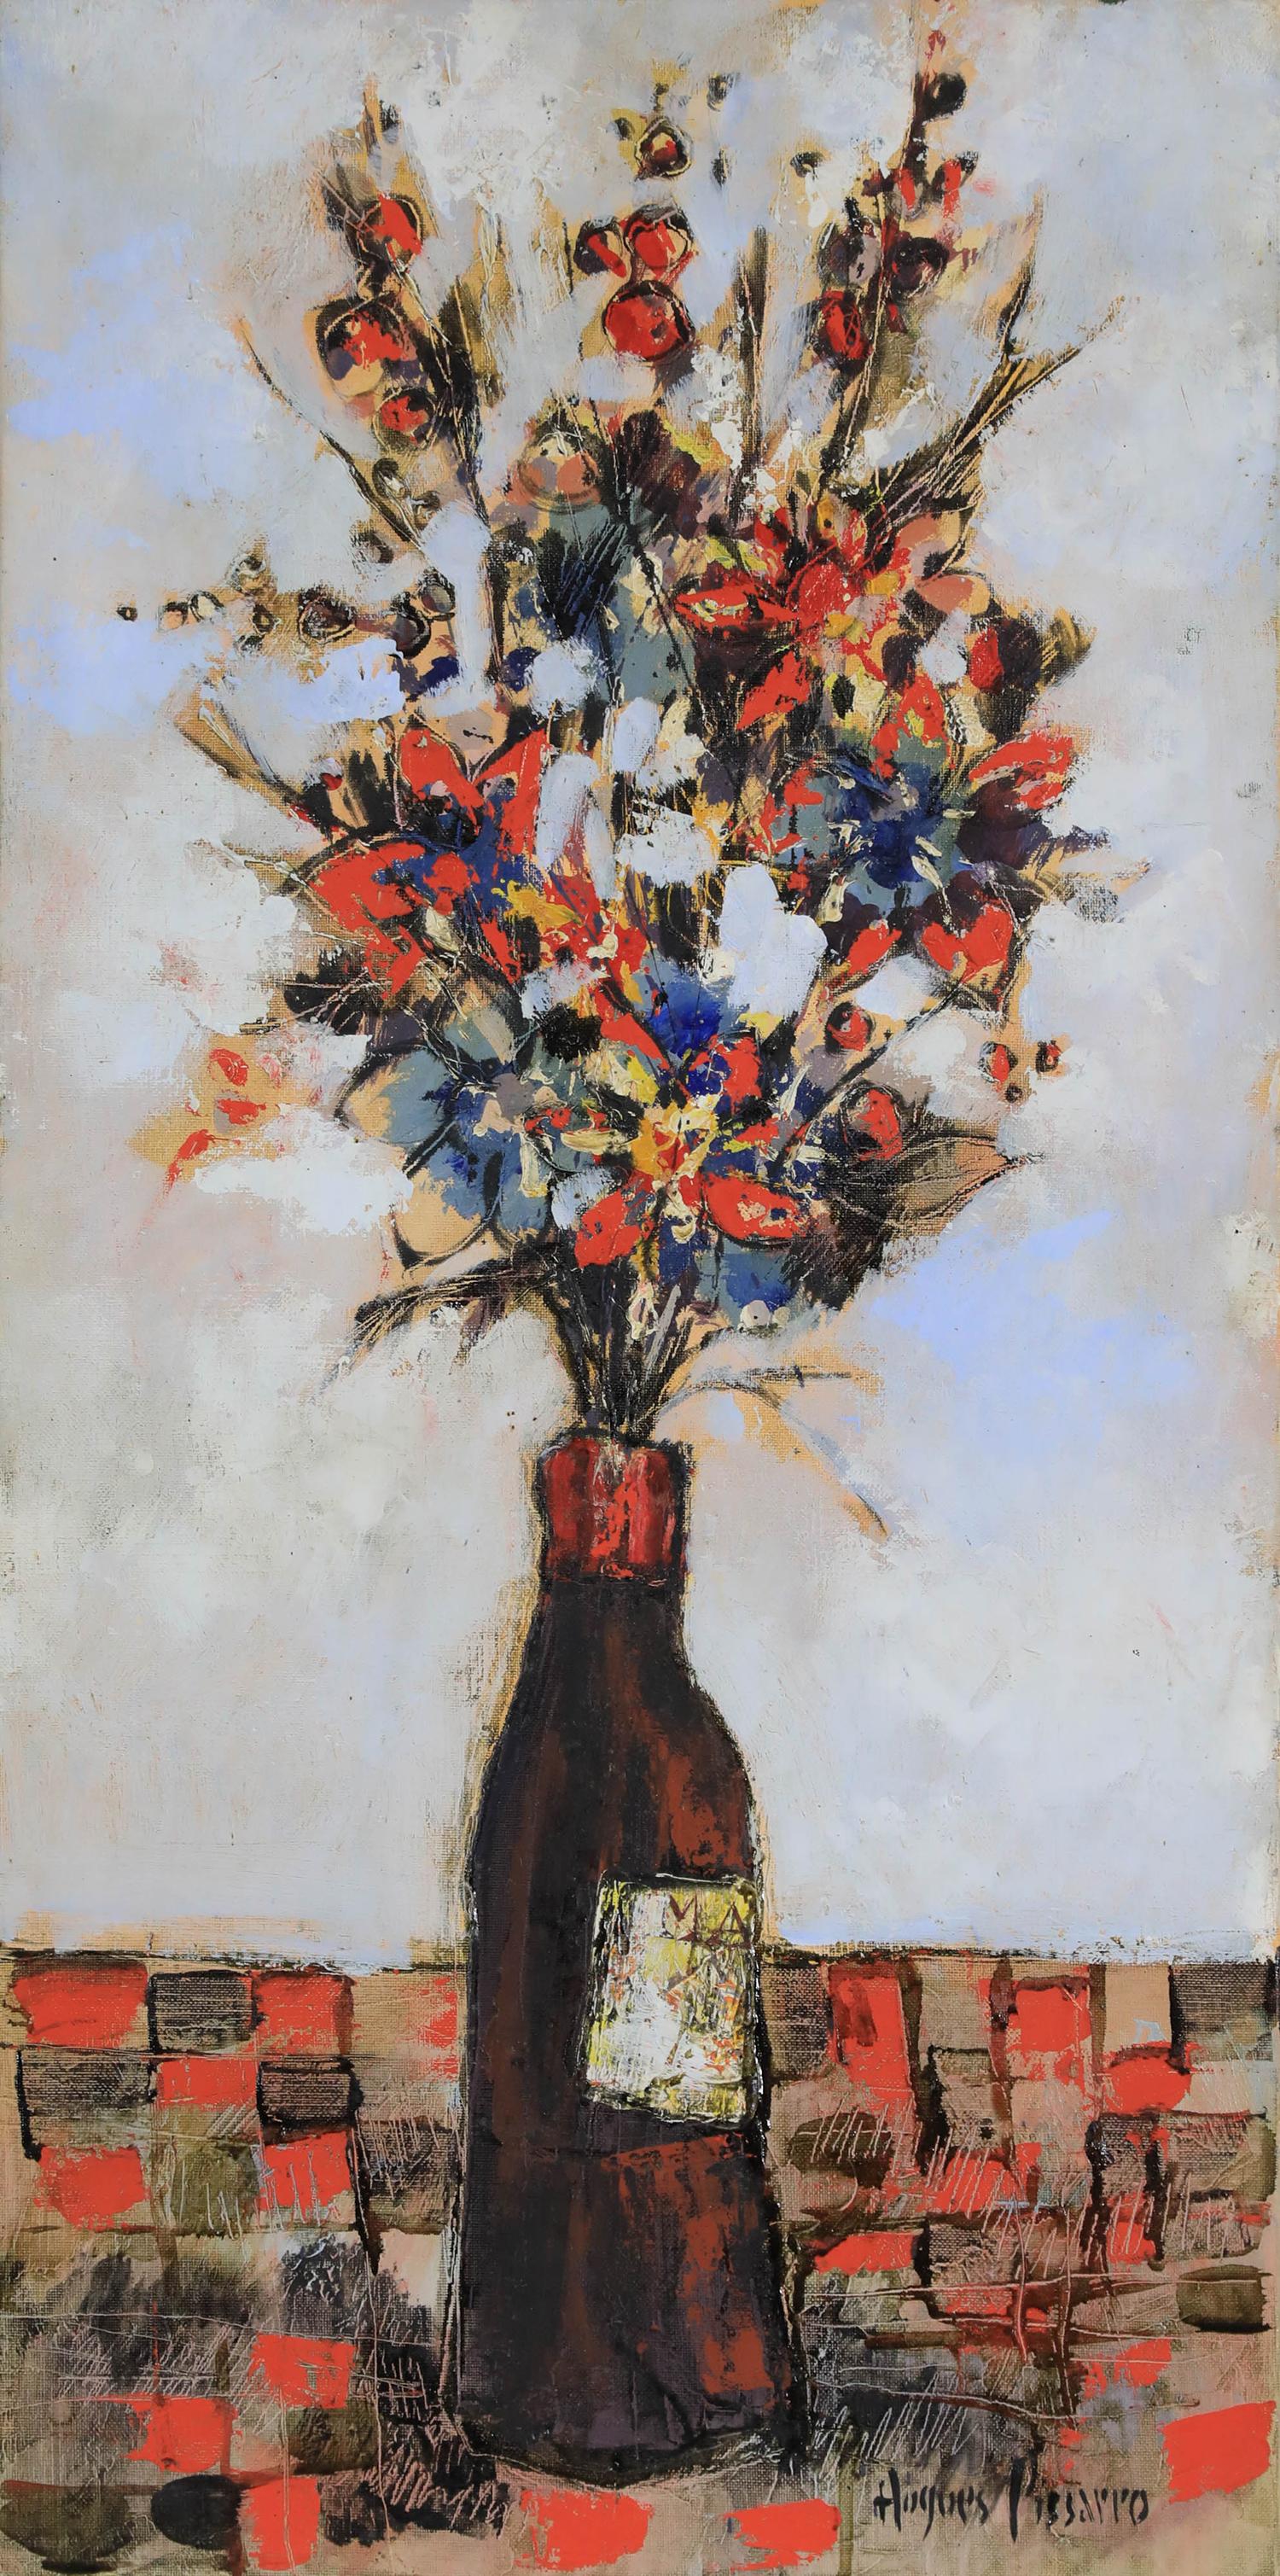 Blumenstrauß von Hugues Pissarro dit Pomié - Contemporary still life painting